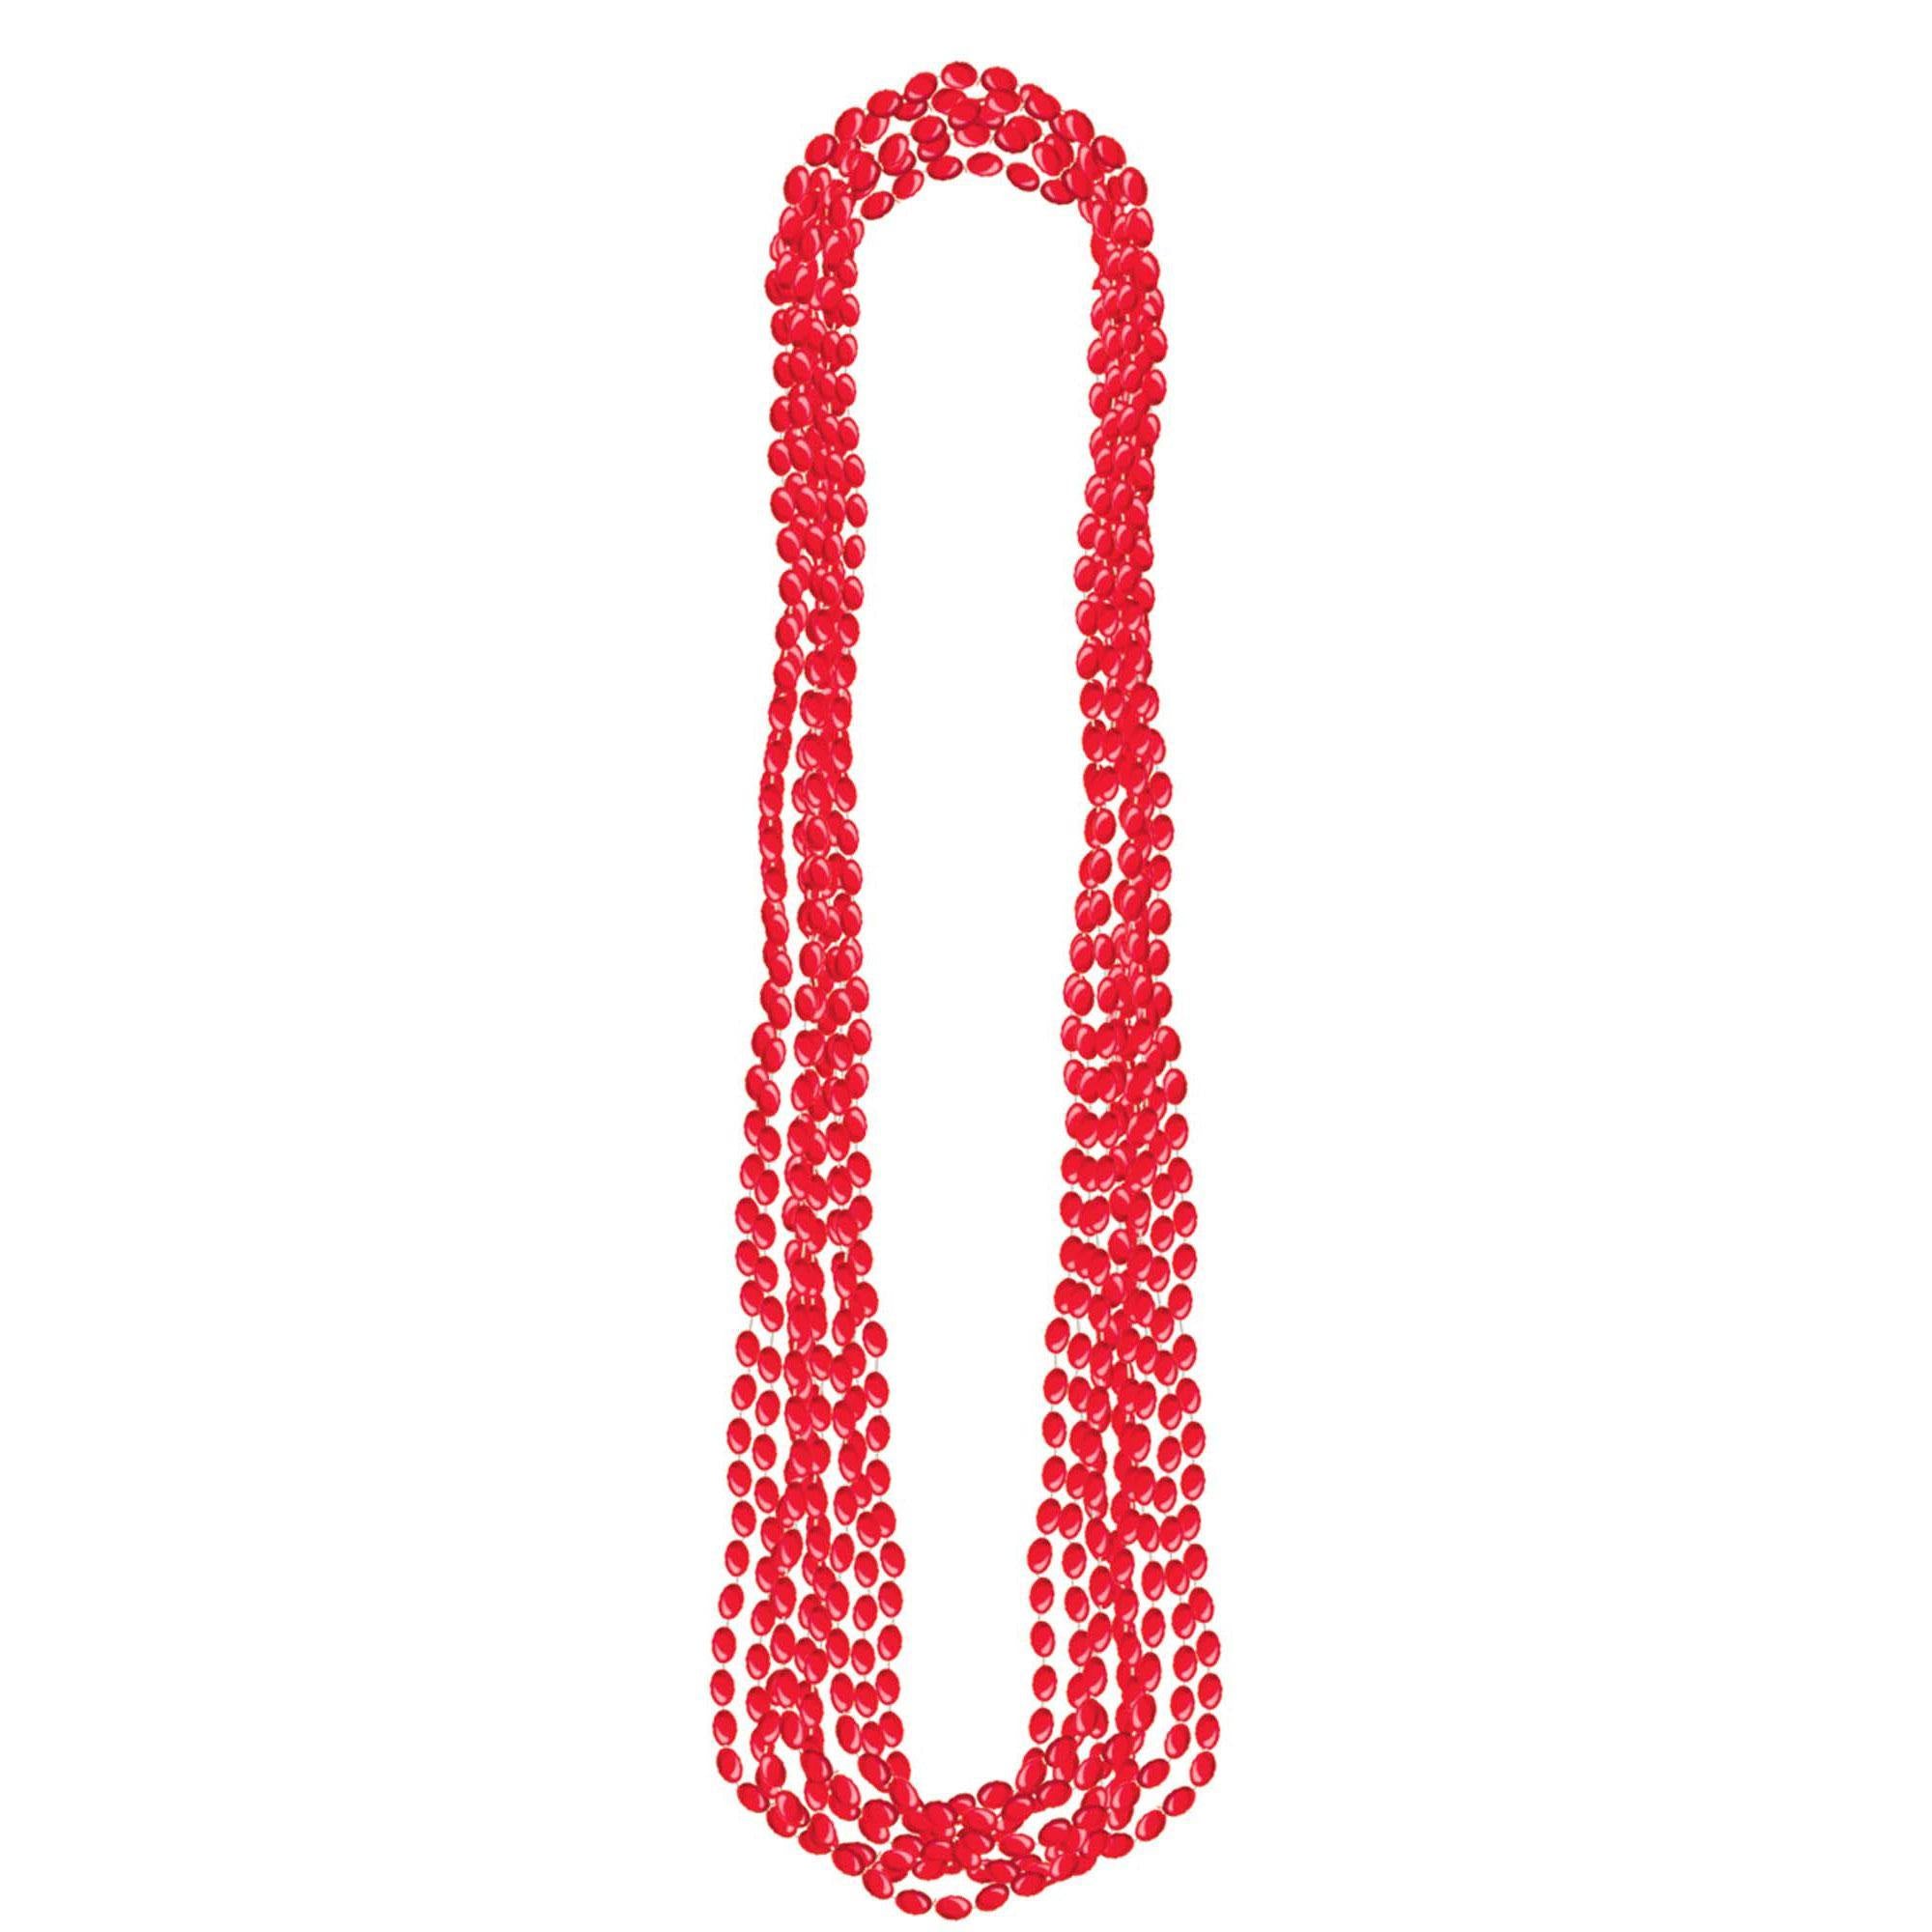 Metallic Red Necklaces 8pcs Costumes & Apparel - Party Centre - Party Centre